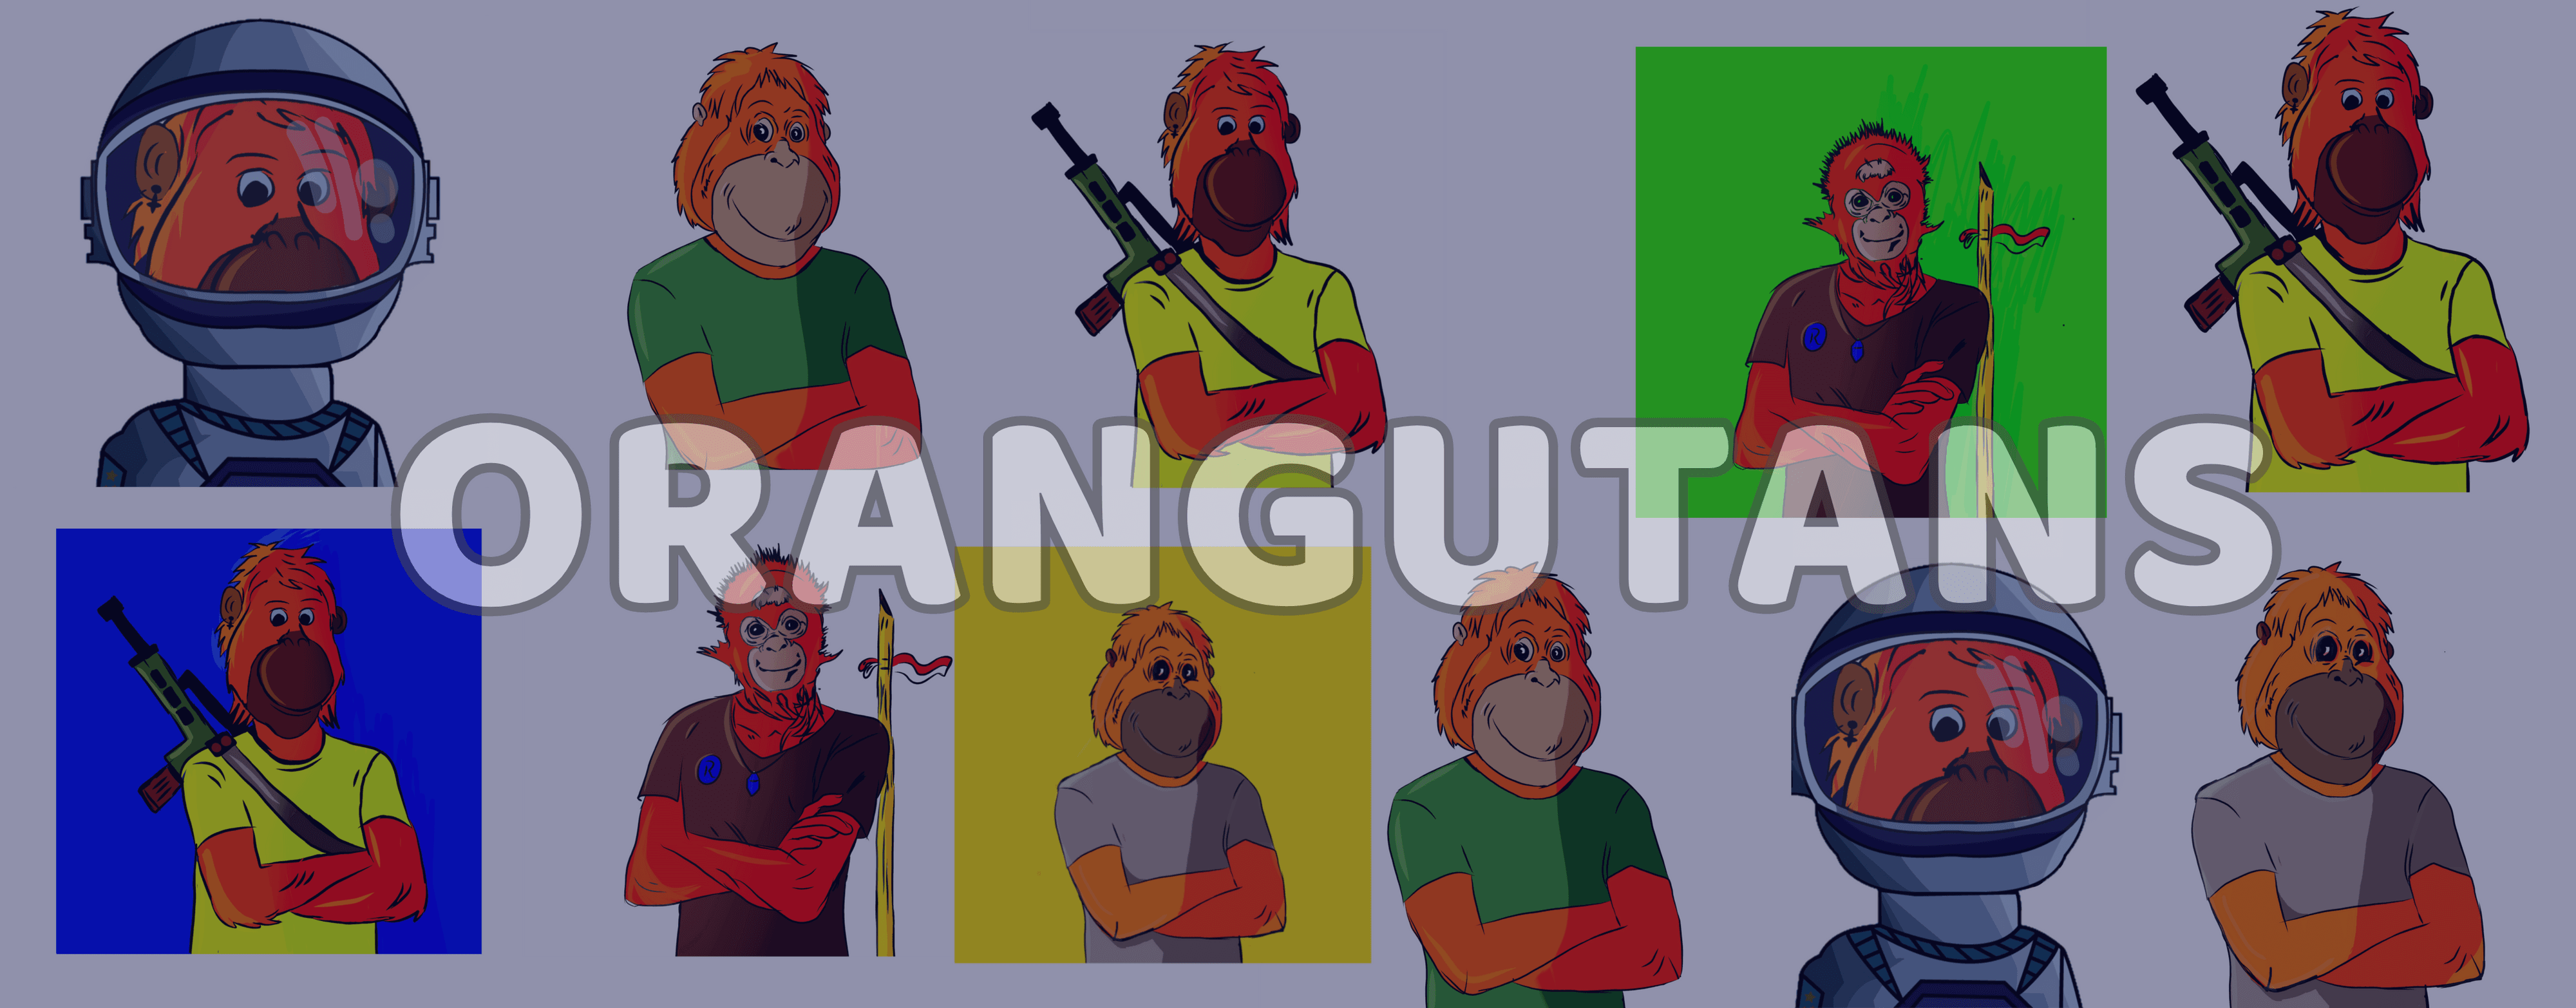 Ape_orangutans_official banner